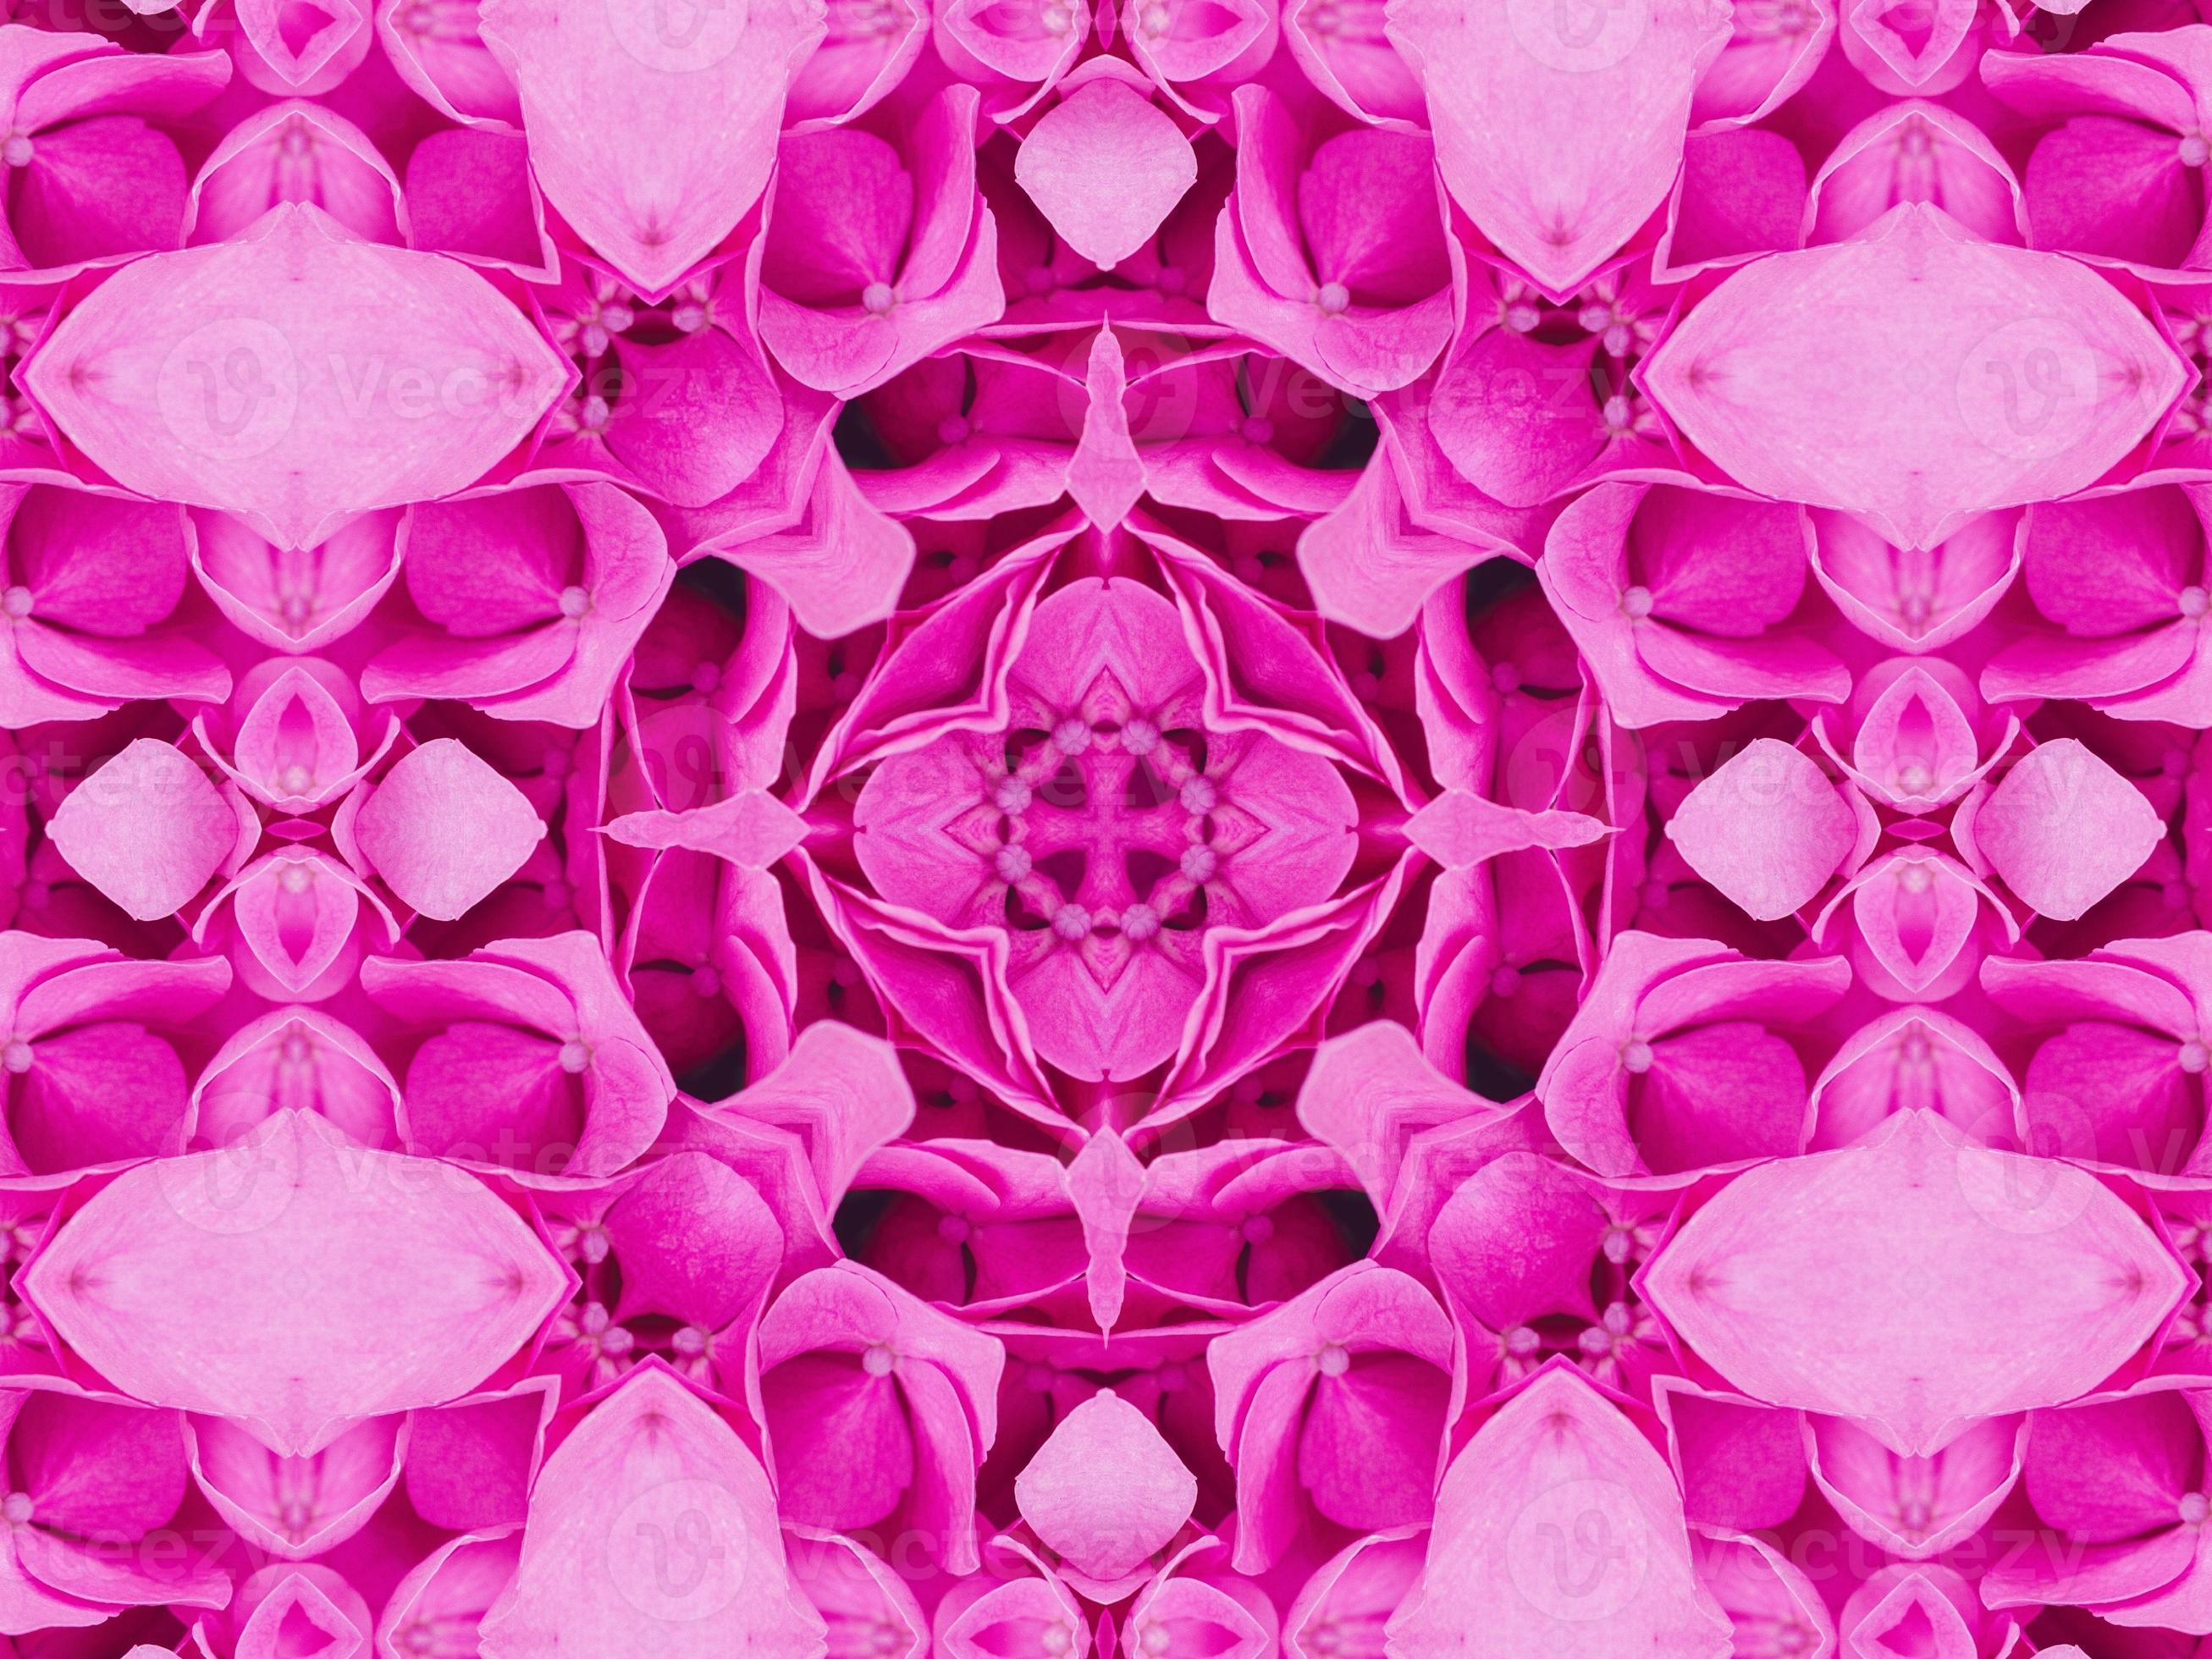  Magenta Hintergrundbild 2613x1960. Magenta floral kaleidoscope pattern. Pink flower abstract unique and aesthetic background